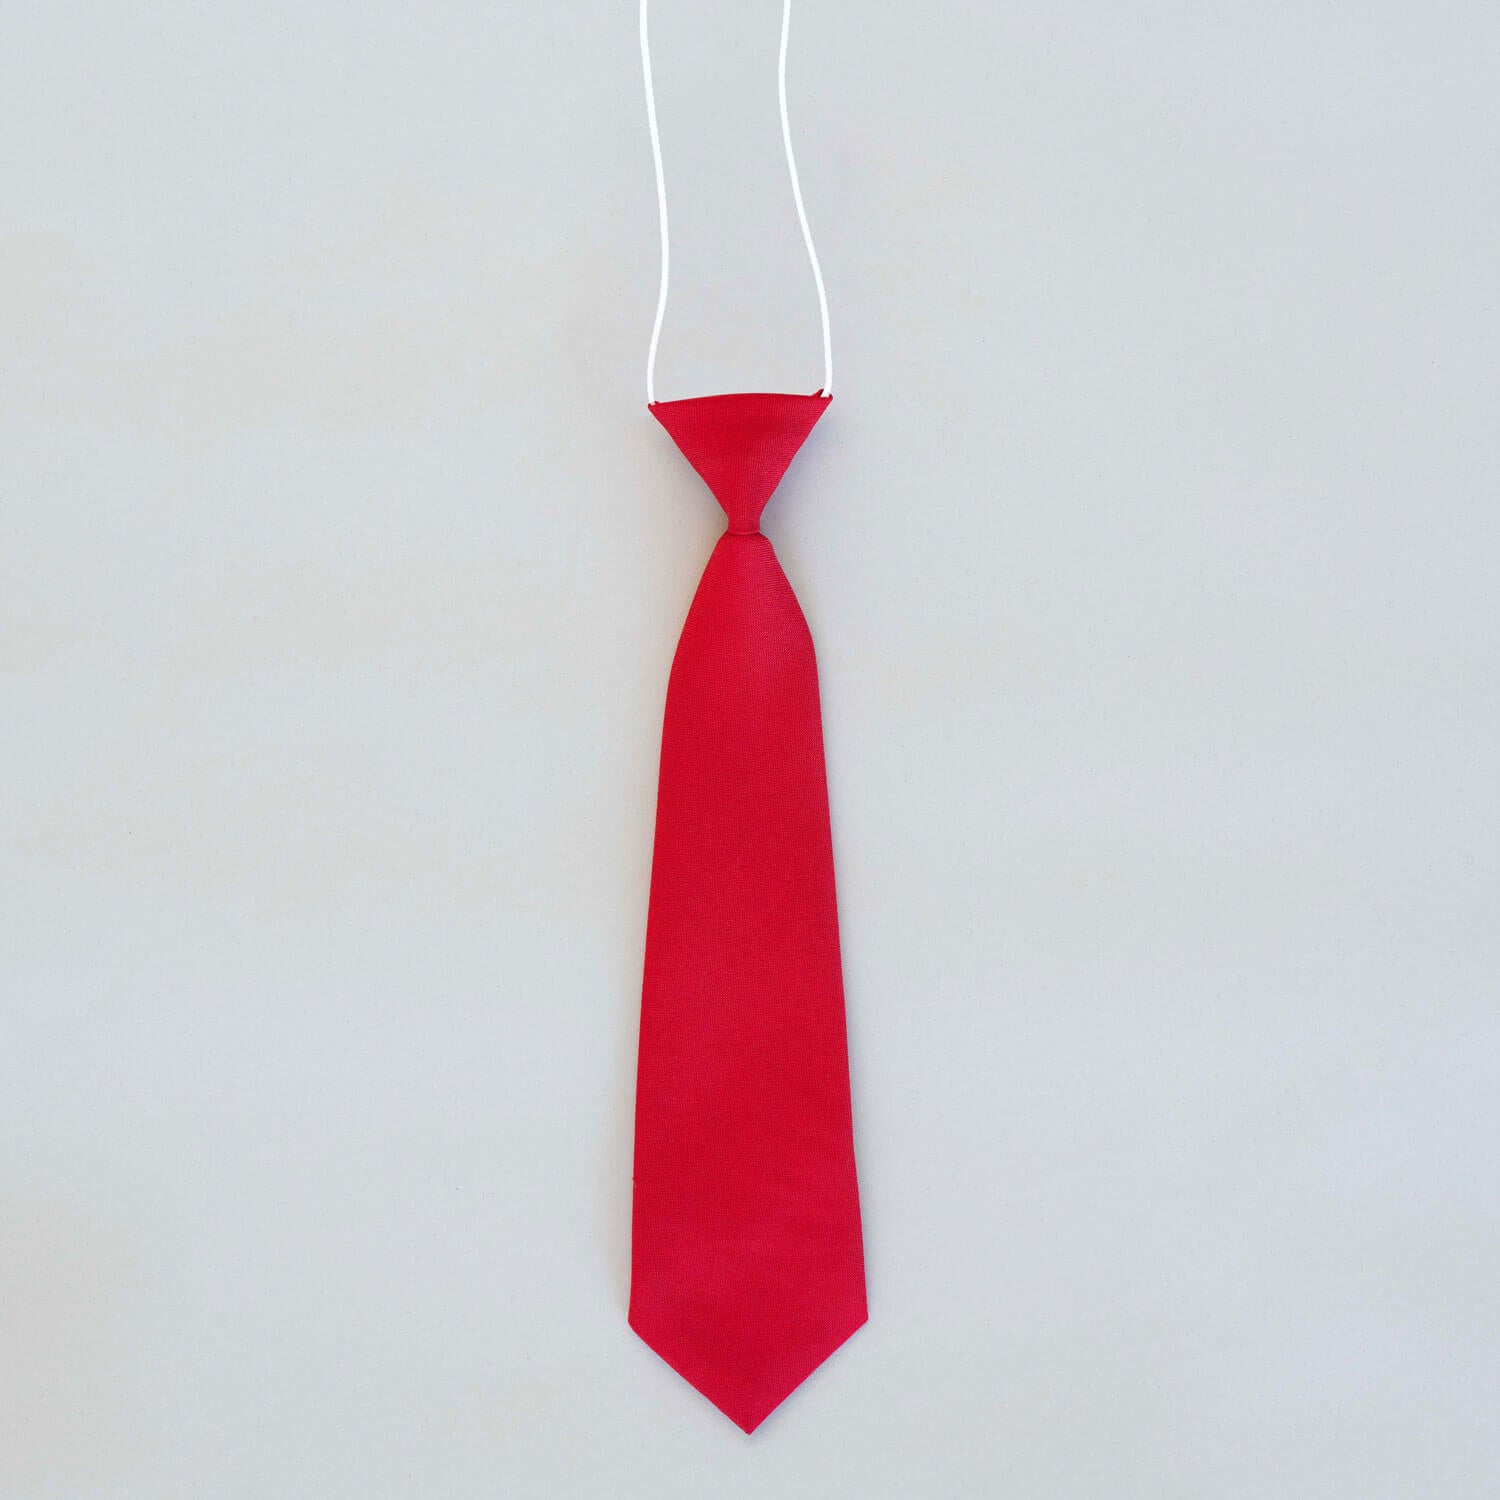 W Mcbrinn Elasticated School Tie - Red 1 Shaws Department Stores